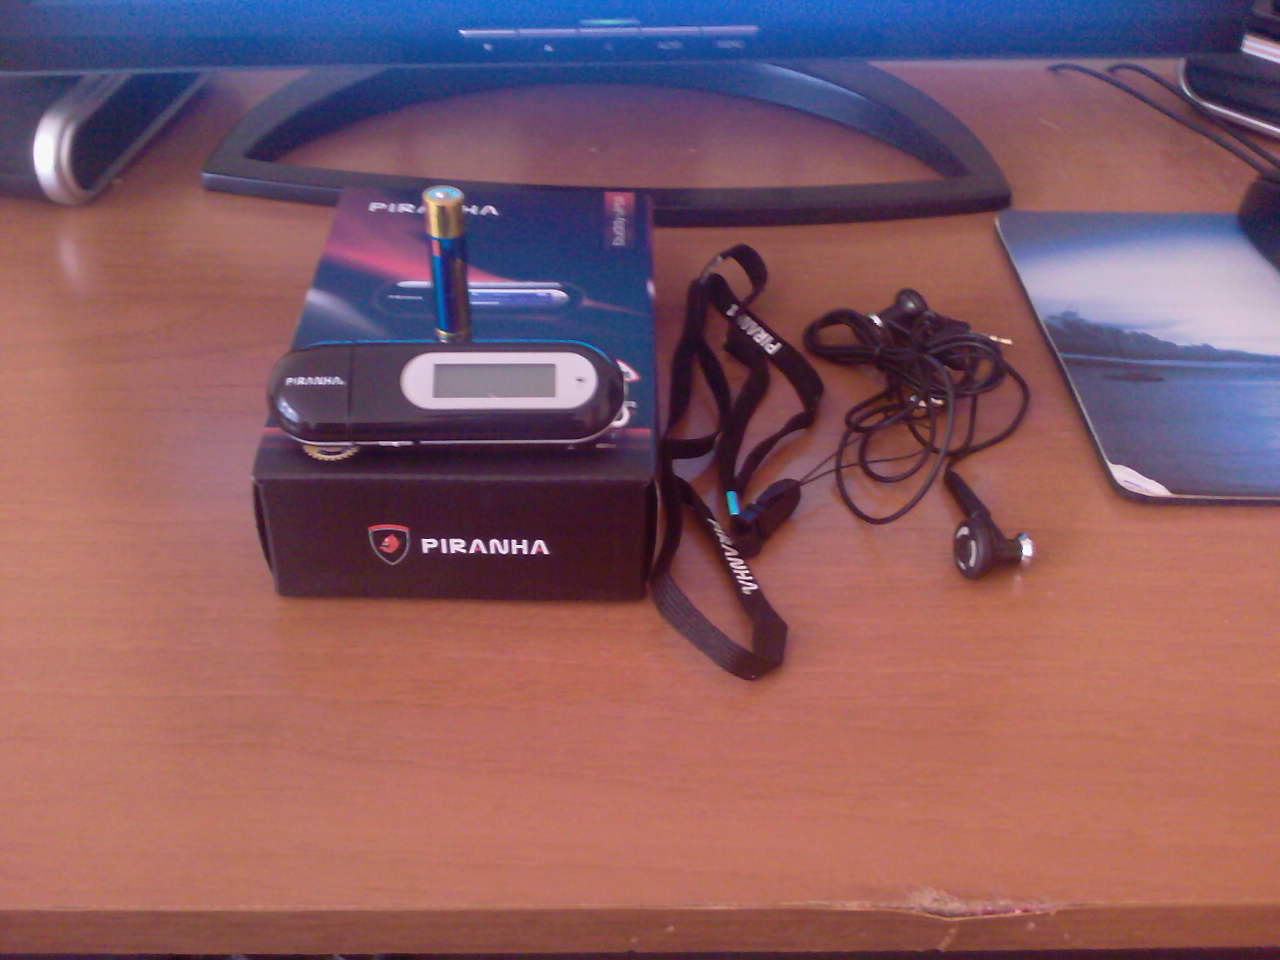  Piranha Buddu Ultra 4gb Fm Radyolu Mp3 Player Tanıtım...